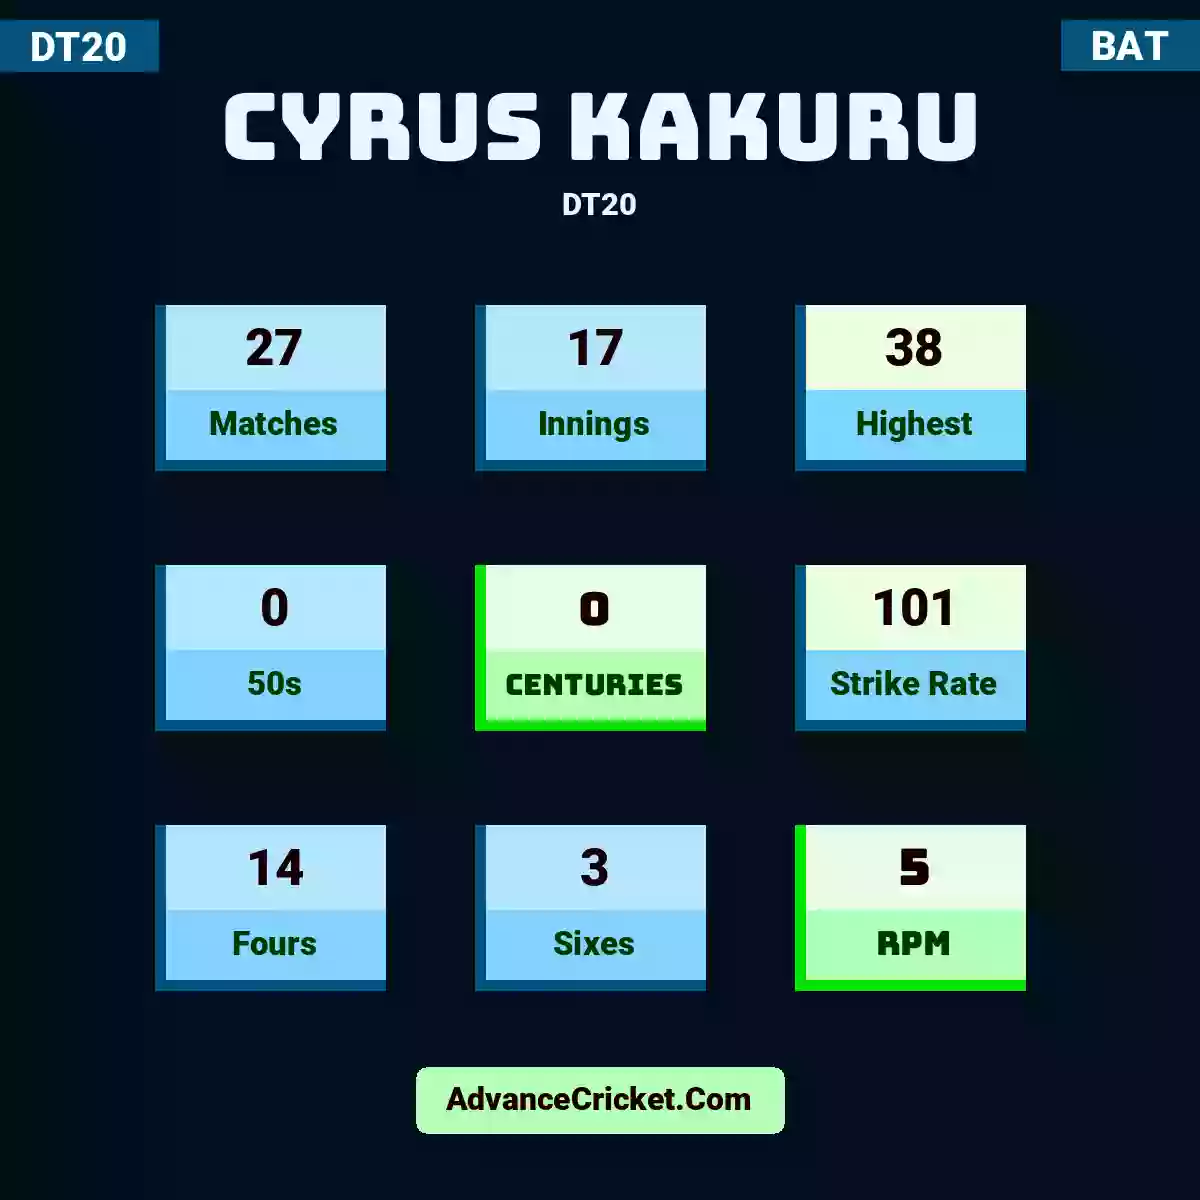 Cyrus Kakuru DT20 , Cyrus Kakuru played 27 matches, scored 38 runs as highest, 0 half-centuries, and 0 centuries, with a strike rate of 101. C.Kakuru hit 14 fours and 3 sixes, with an RPM of 5.